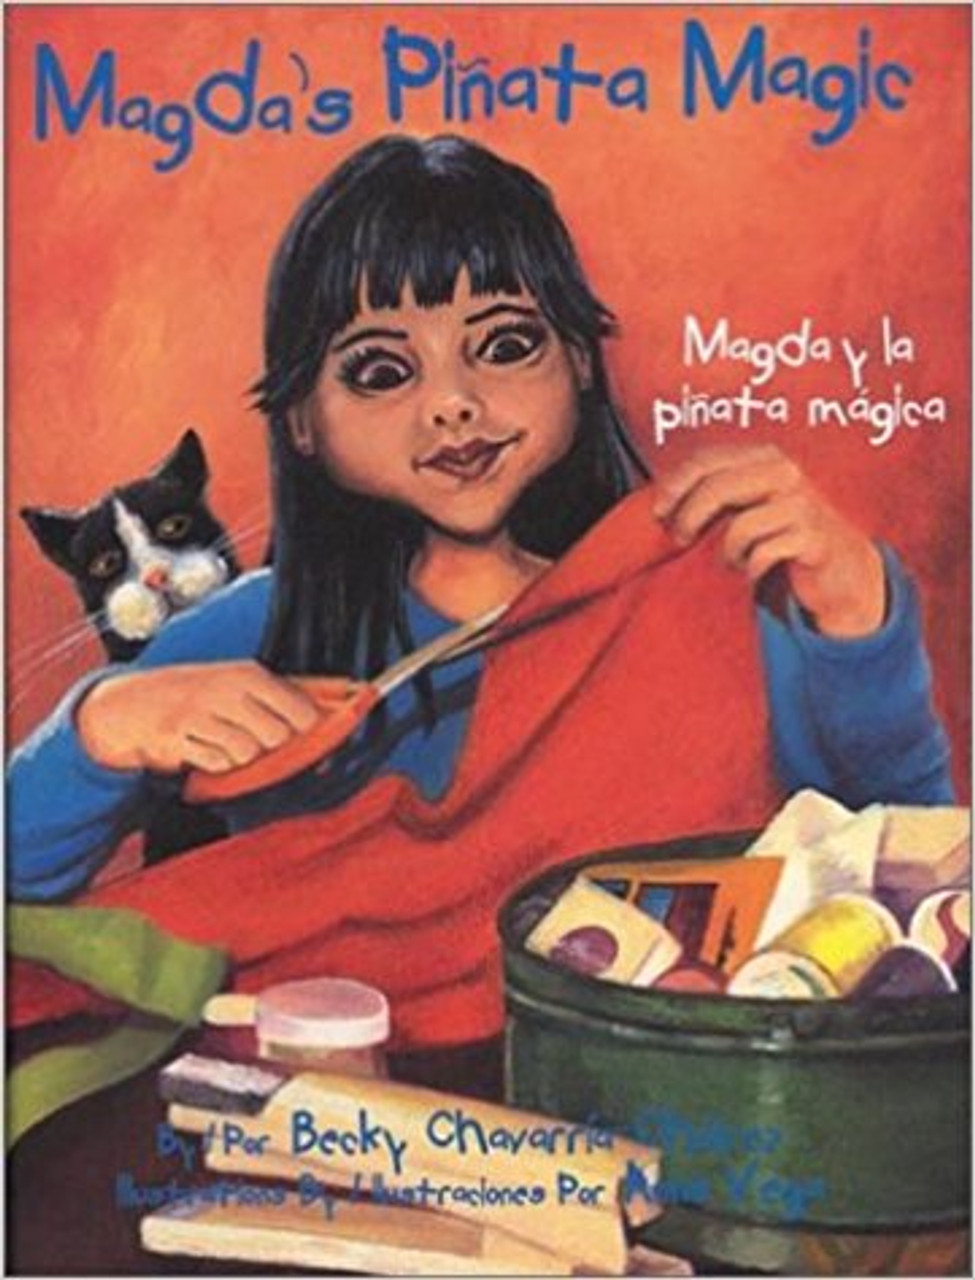 Magda's Pinata Magic/Magda Y La Pinata Magica by Becky Chavarria-Chairez 